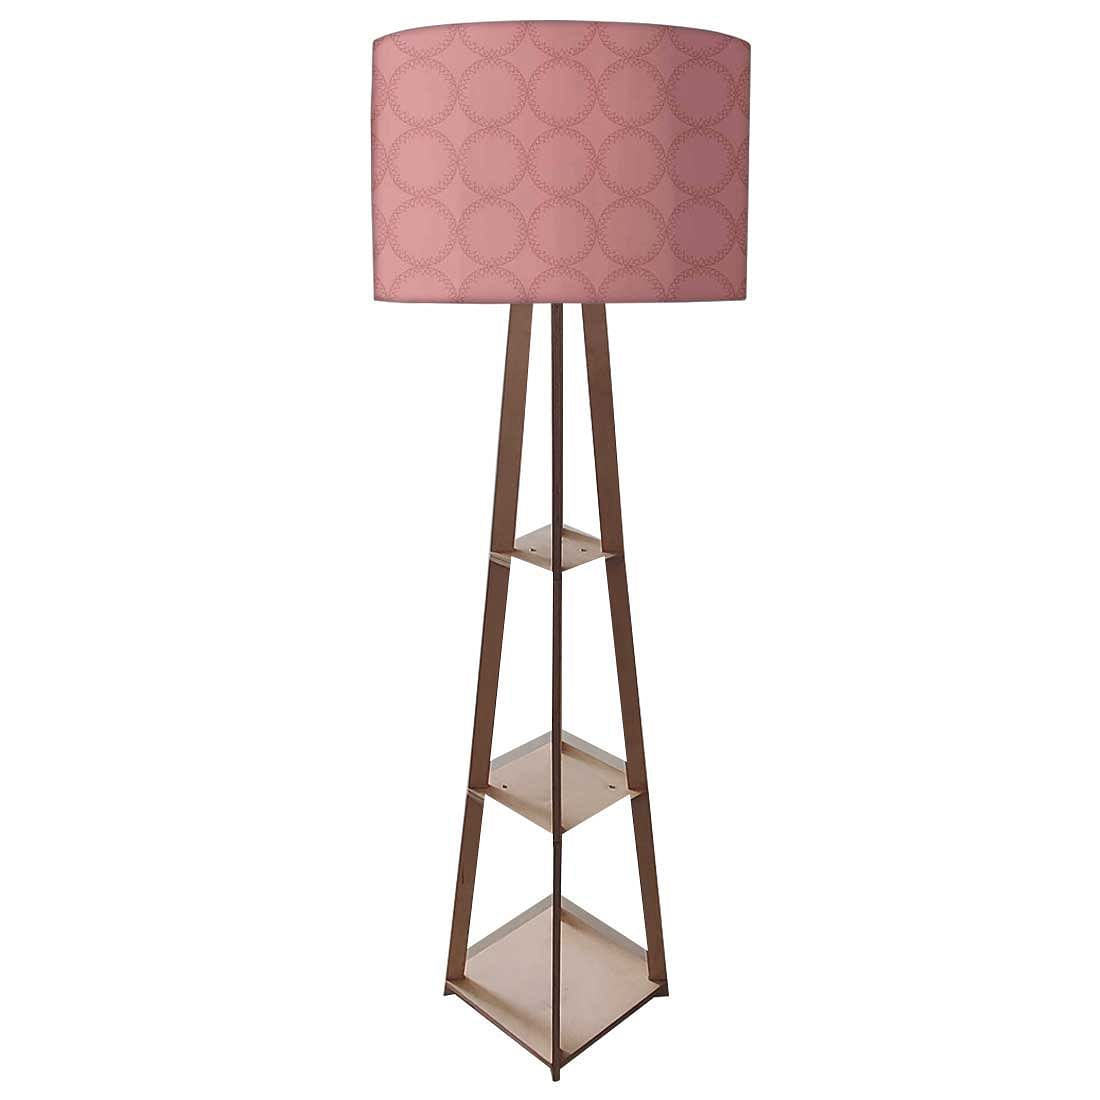 Modern Floor Lamps for Living Room - Circle Nutcase